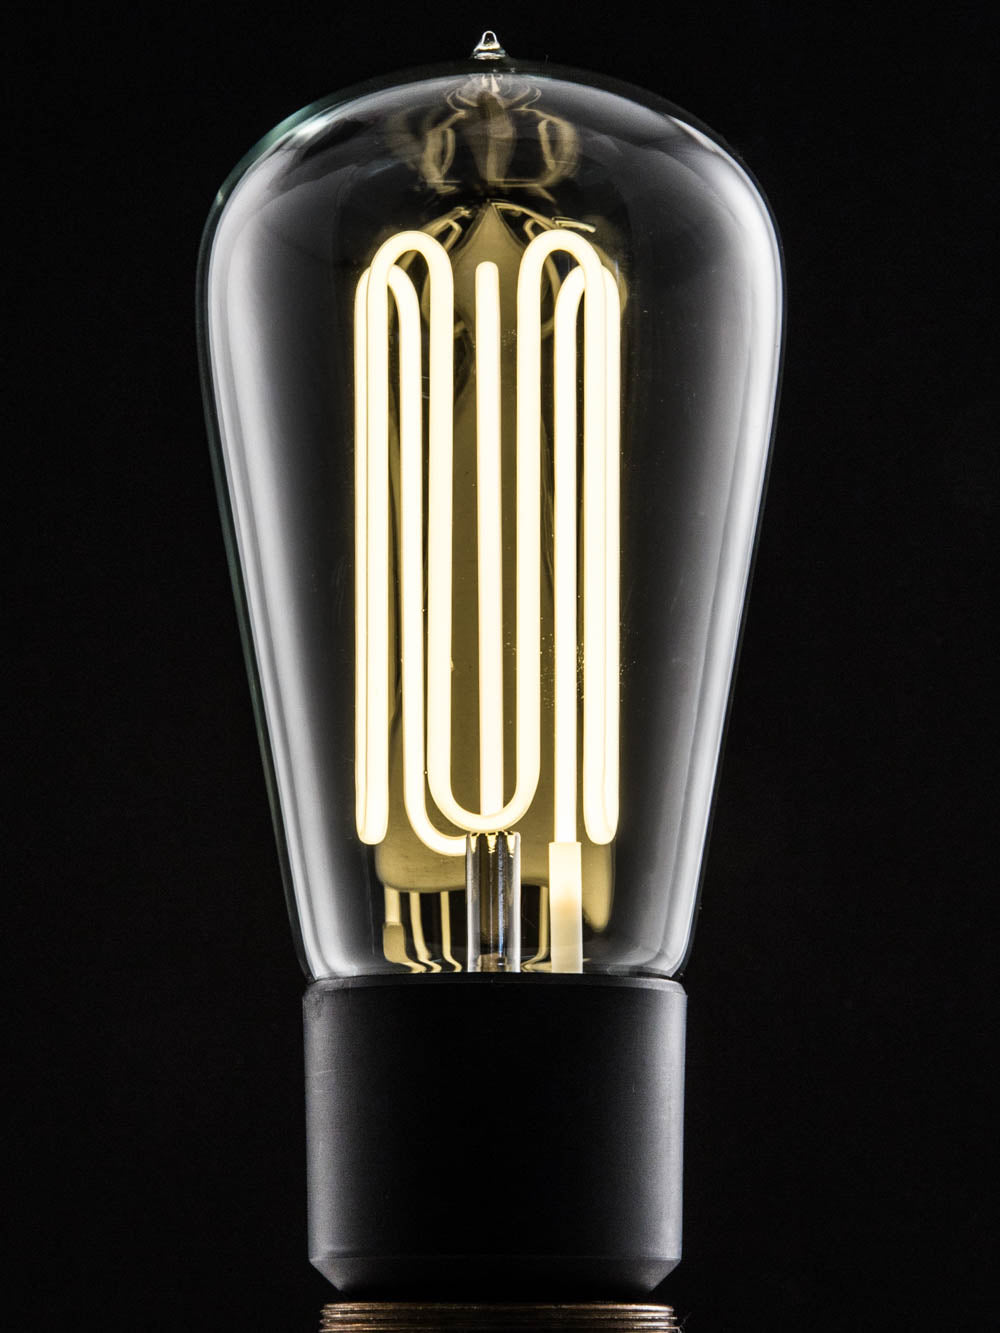 Pear Shape Eco-Filament Bulb | E27 | End-Of-Line